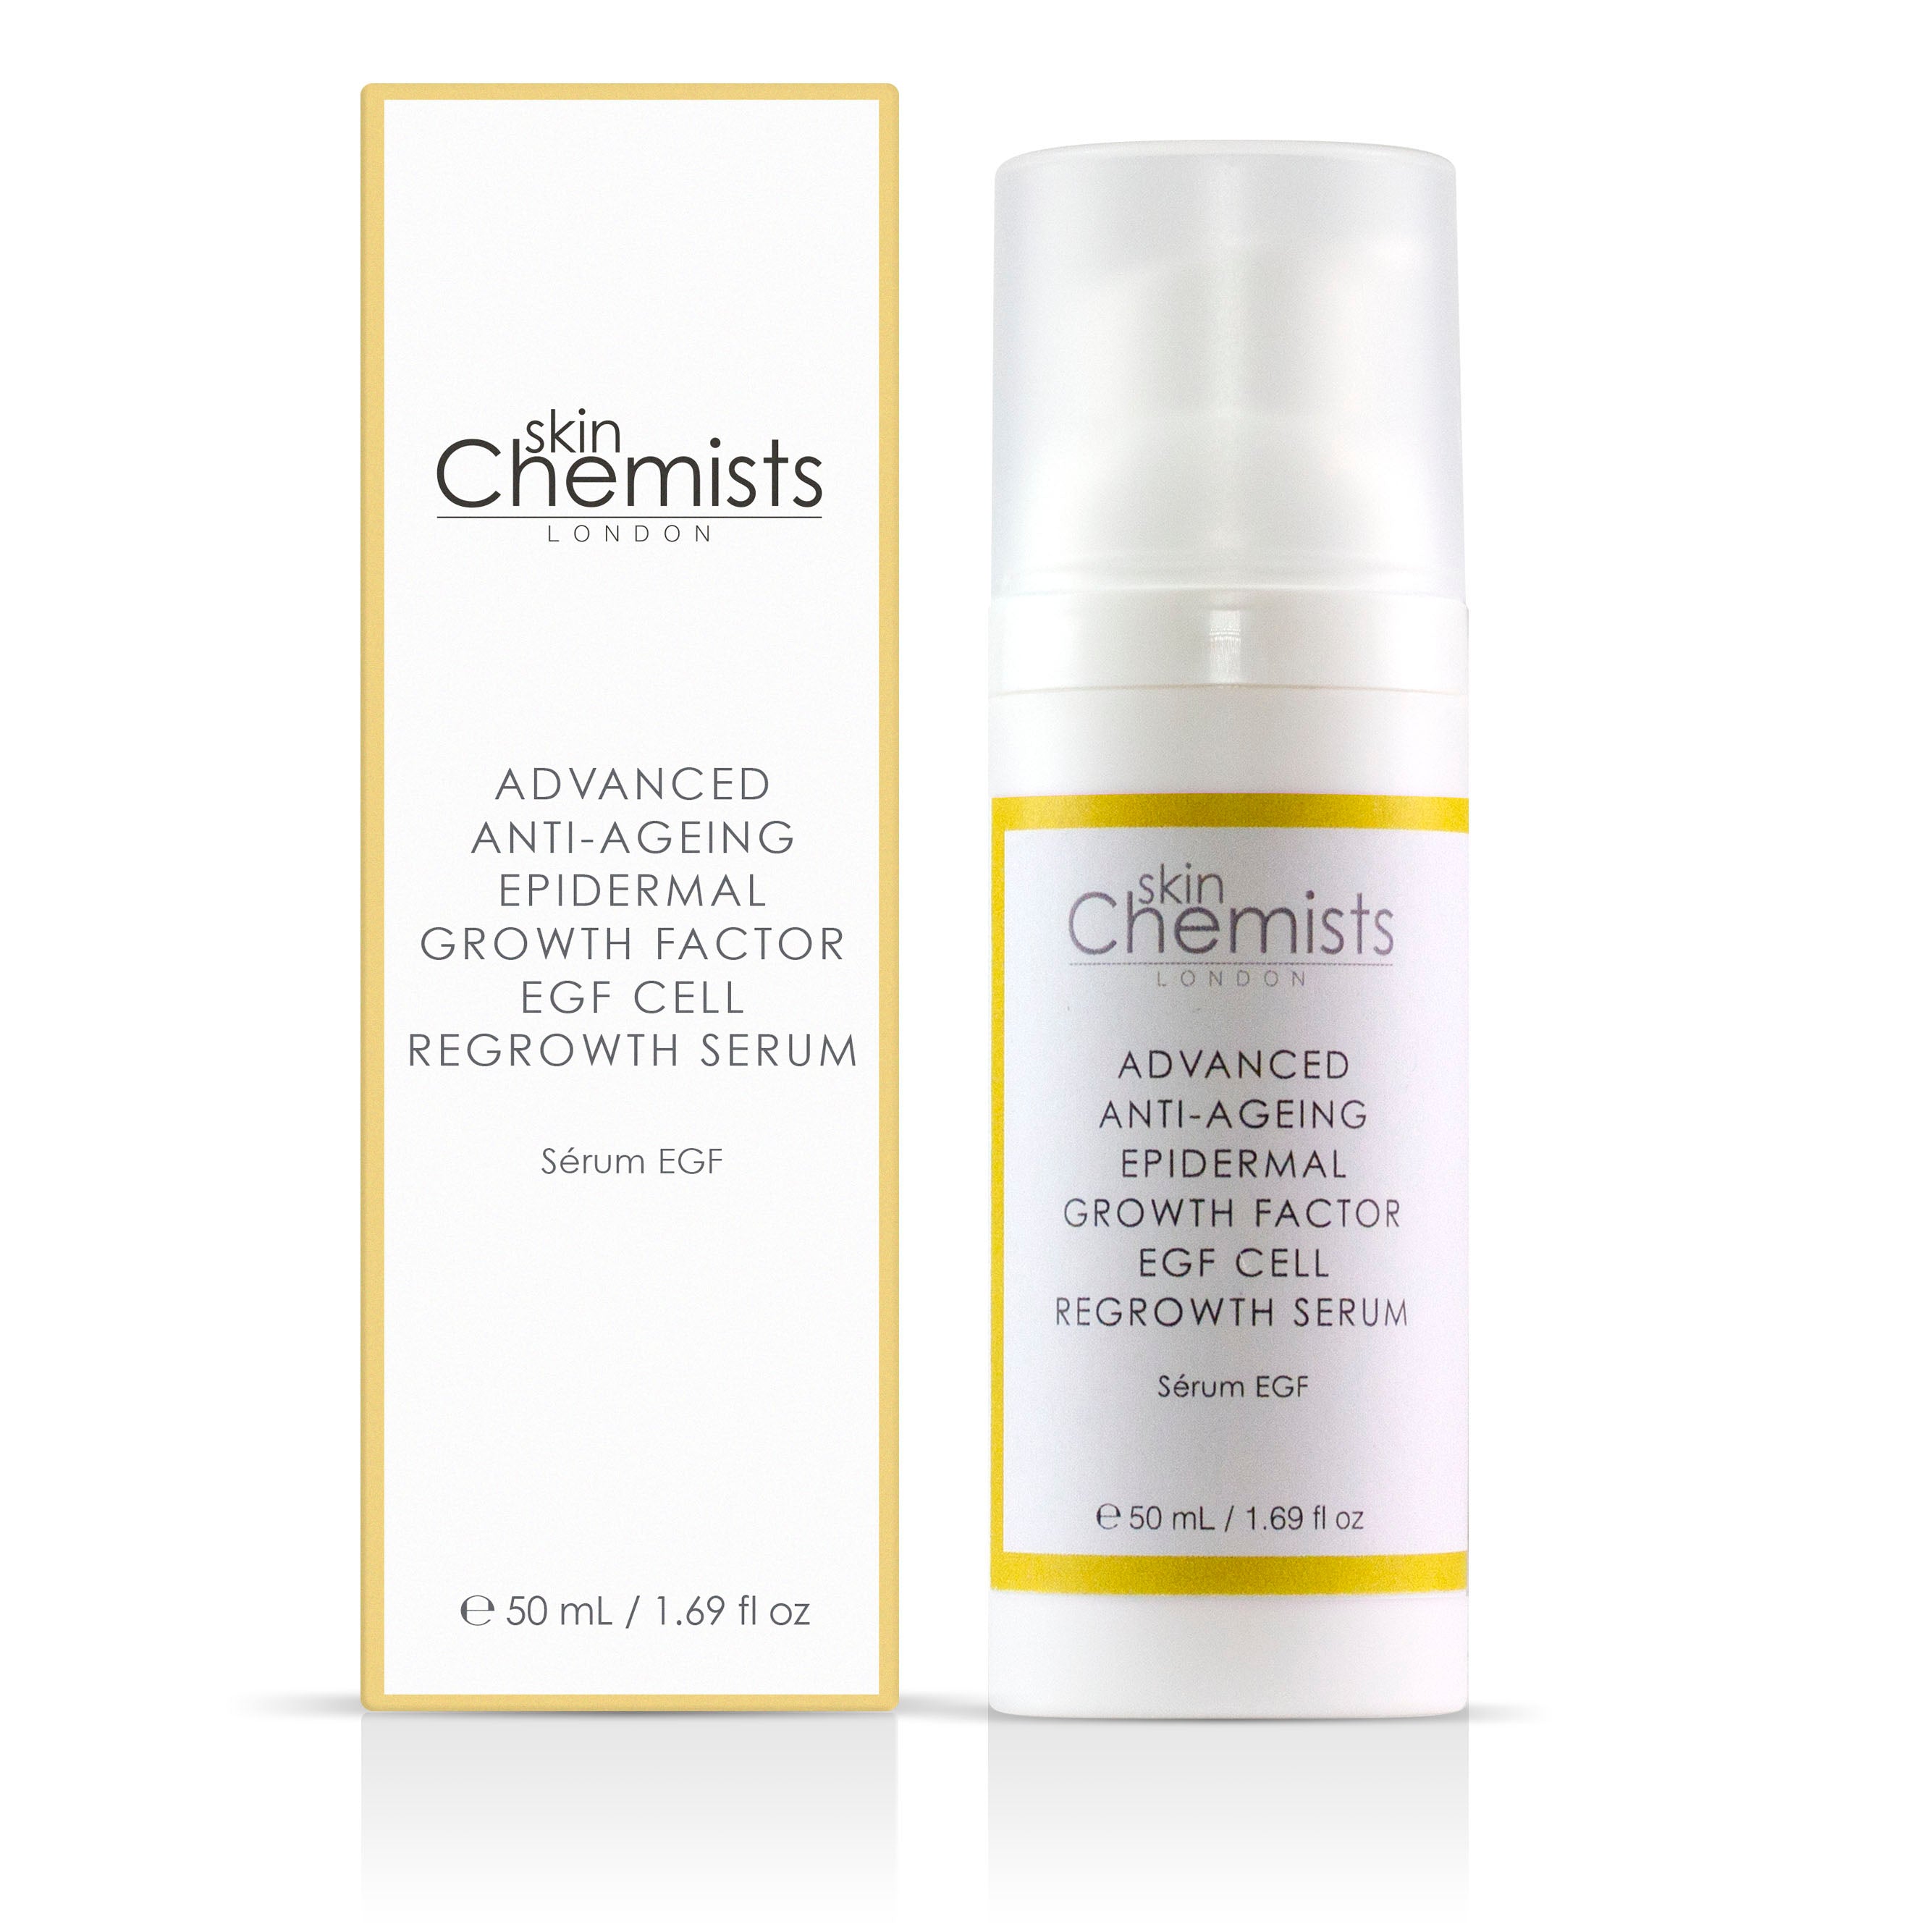 Crème de jour SPF 30+skinChemists Advanced Epidermal Growth Factor Cell Regrowth Serum+Mask 